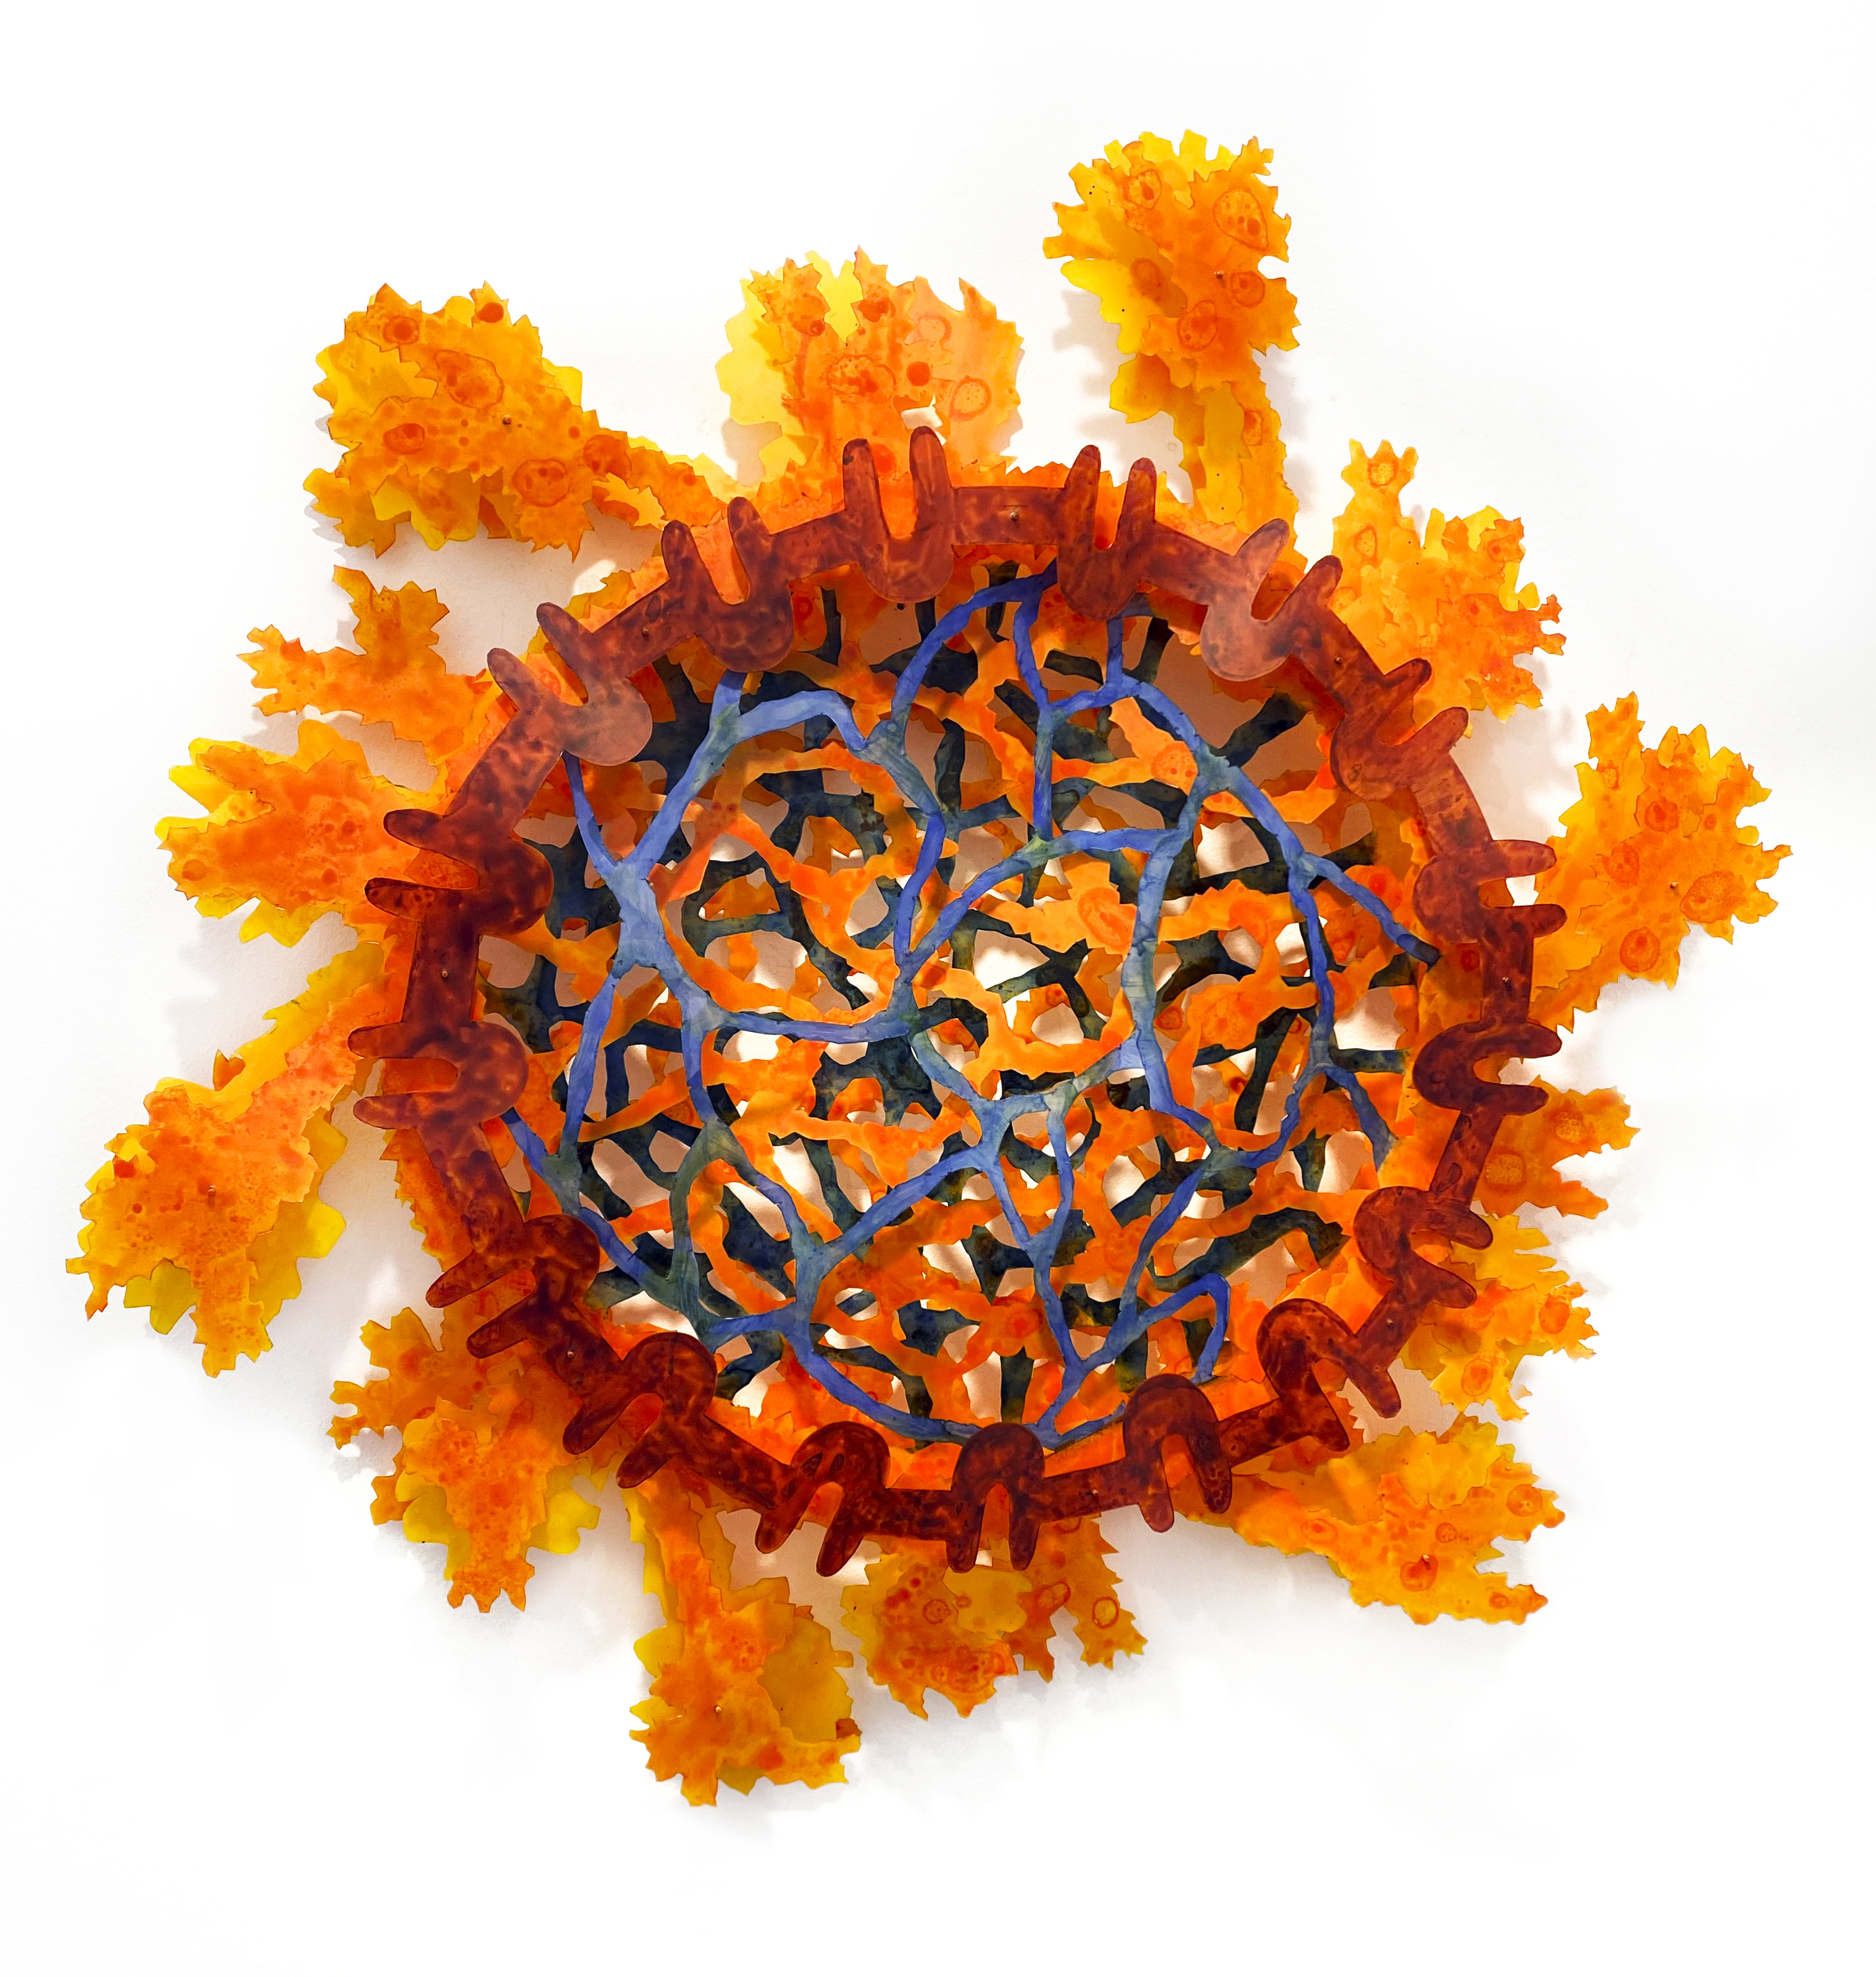 Acrylic on mylar painting of coronavirus